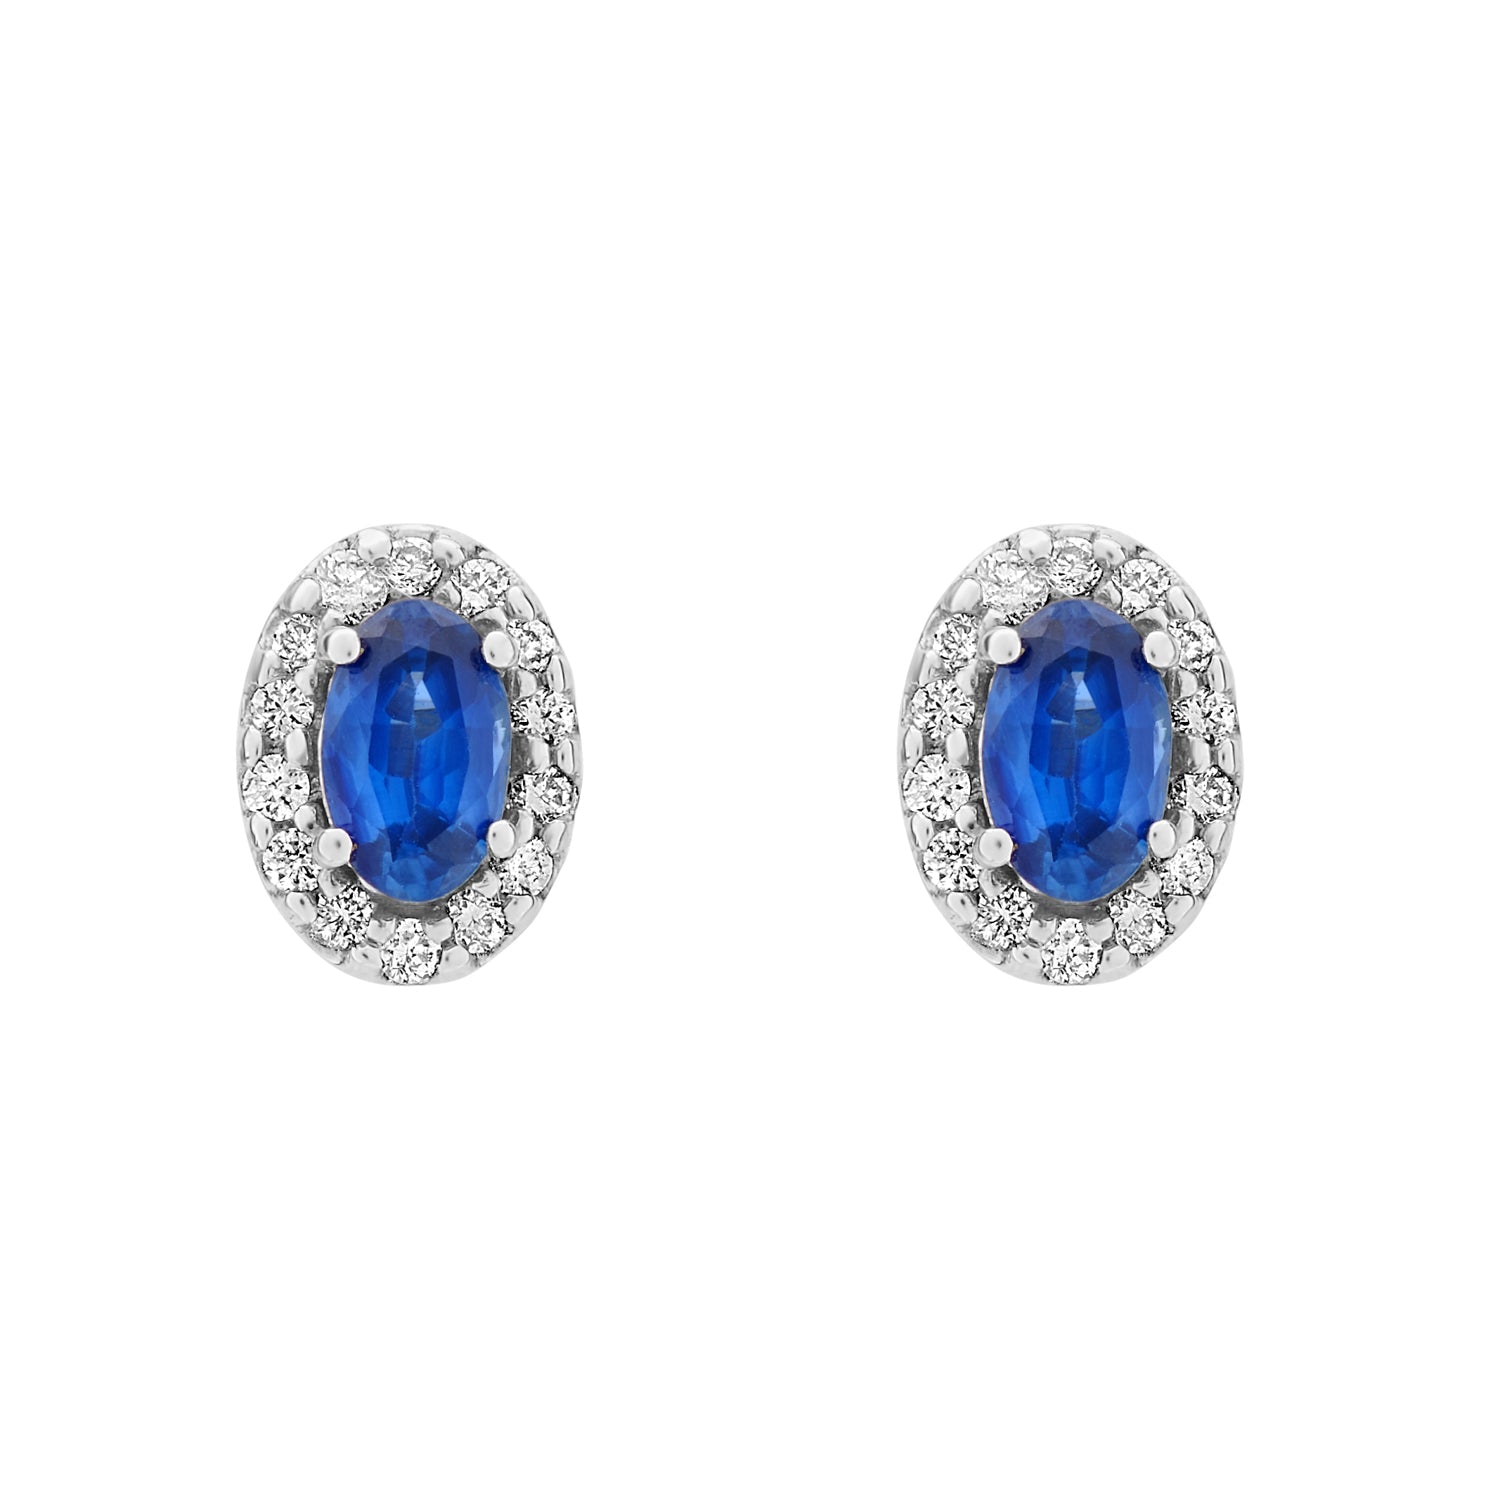 Diamond and Gemstone Cluster Earrings. 0.14ct